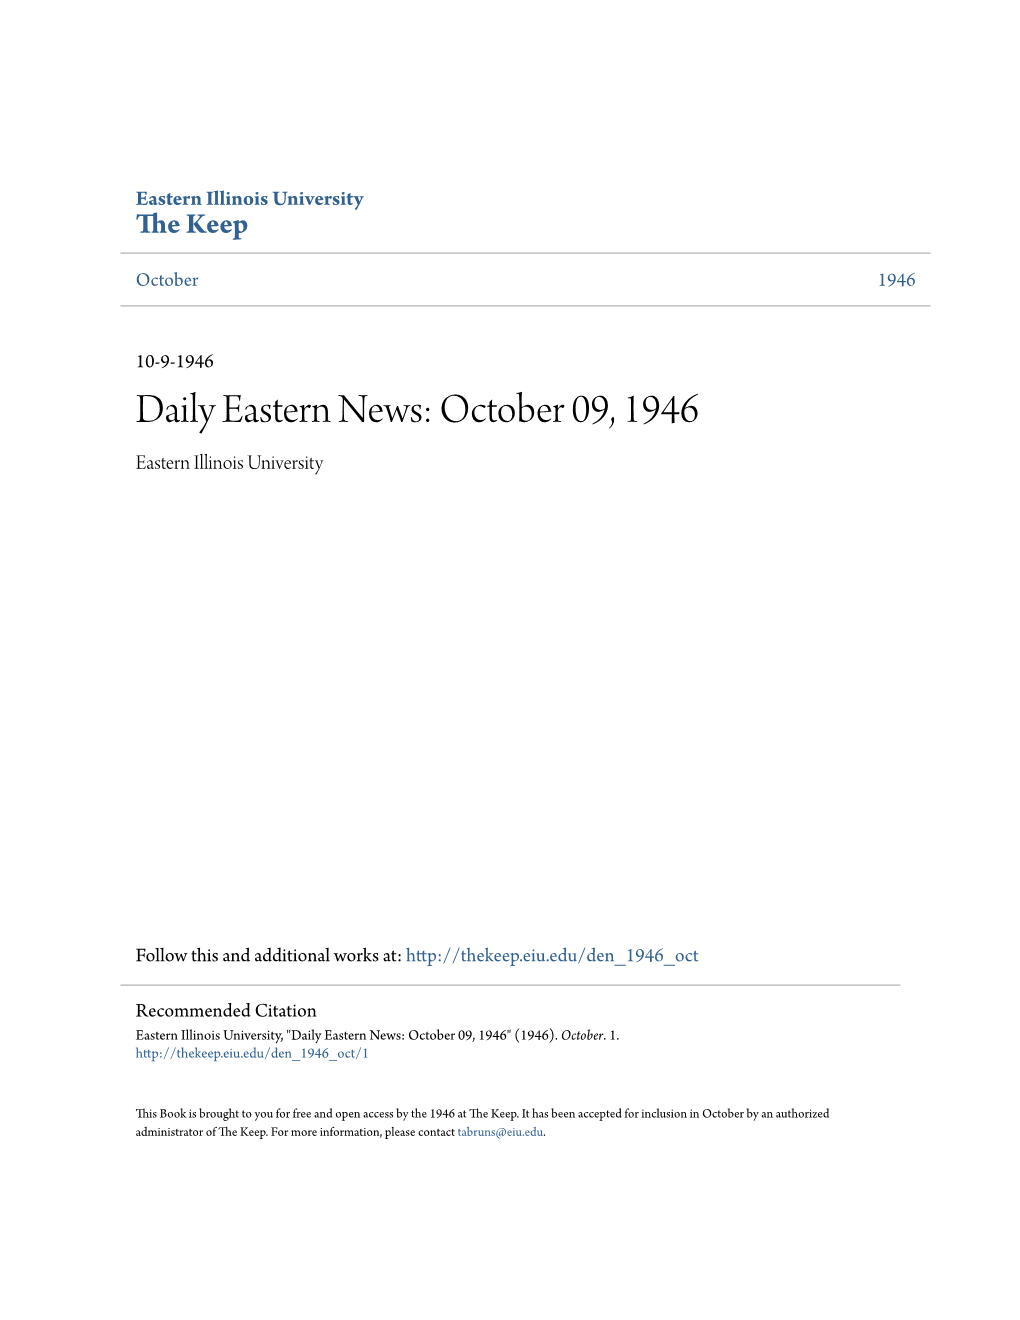 Daily Eastern News: October 09, 1946 Eastern Illinois University